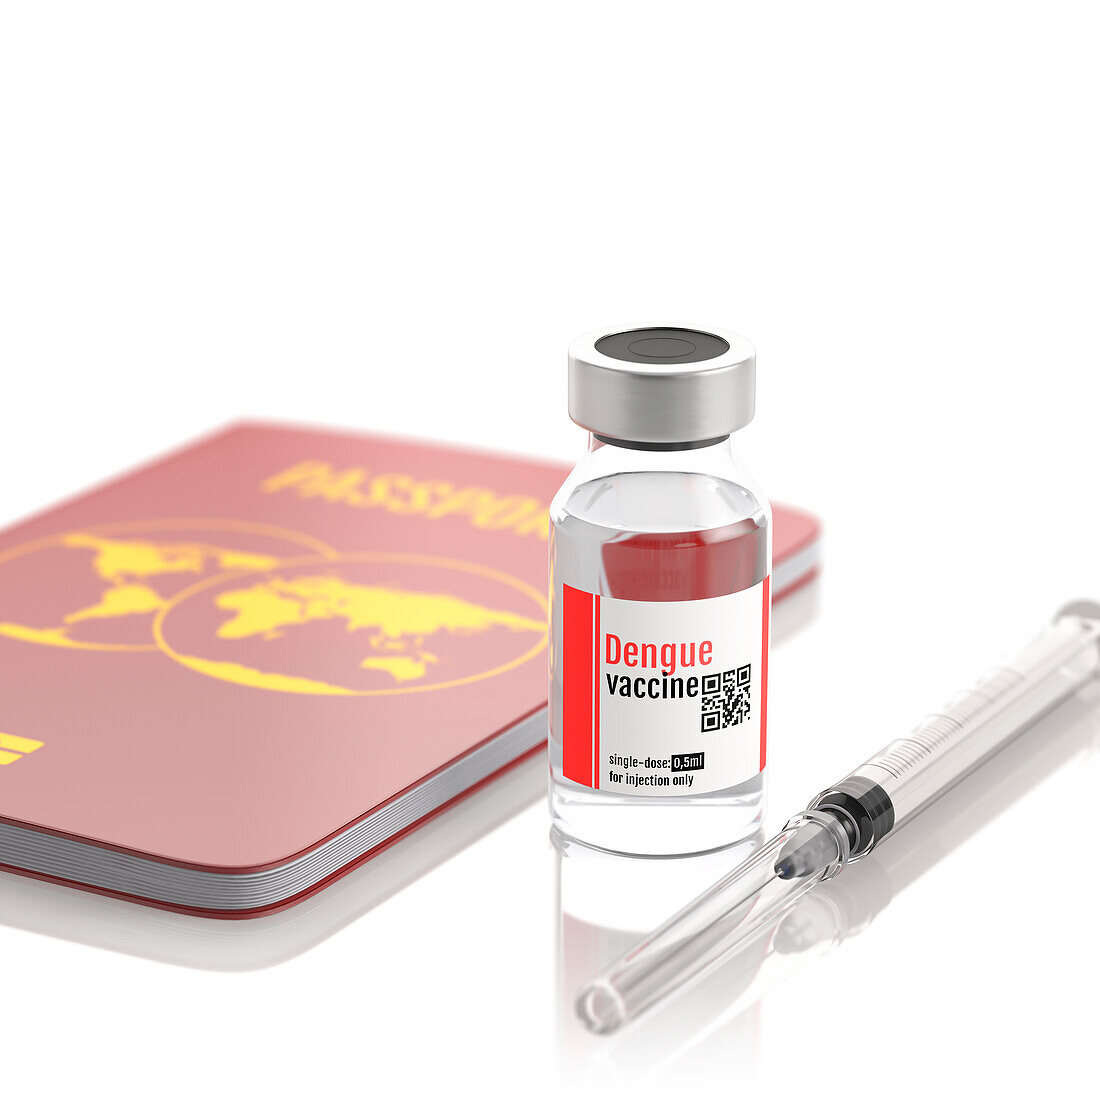 Dengue vaccine for travel, illustration